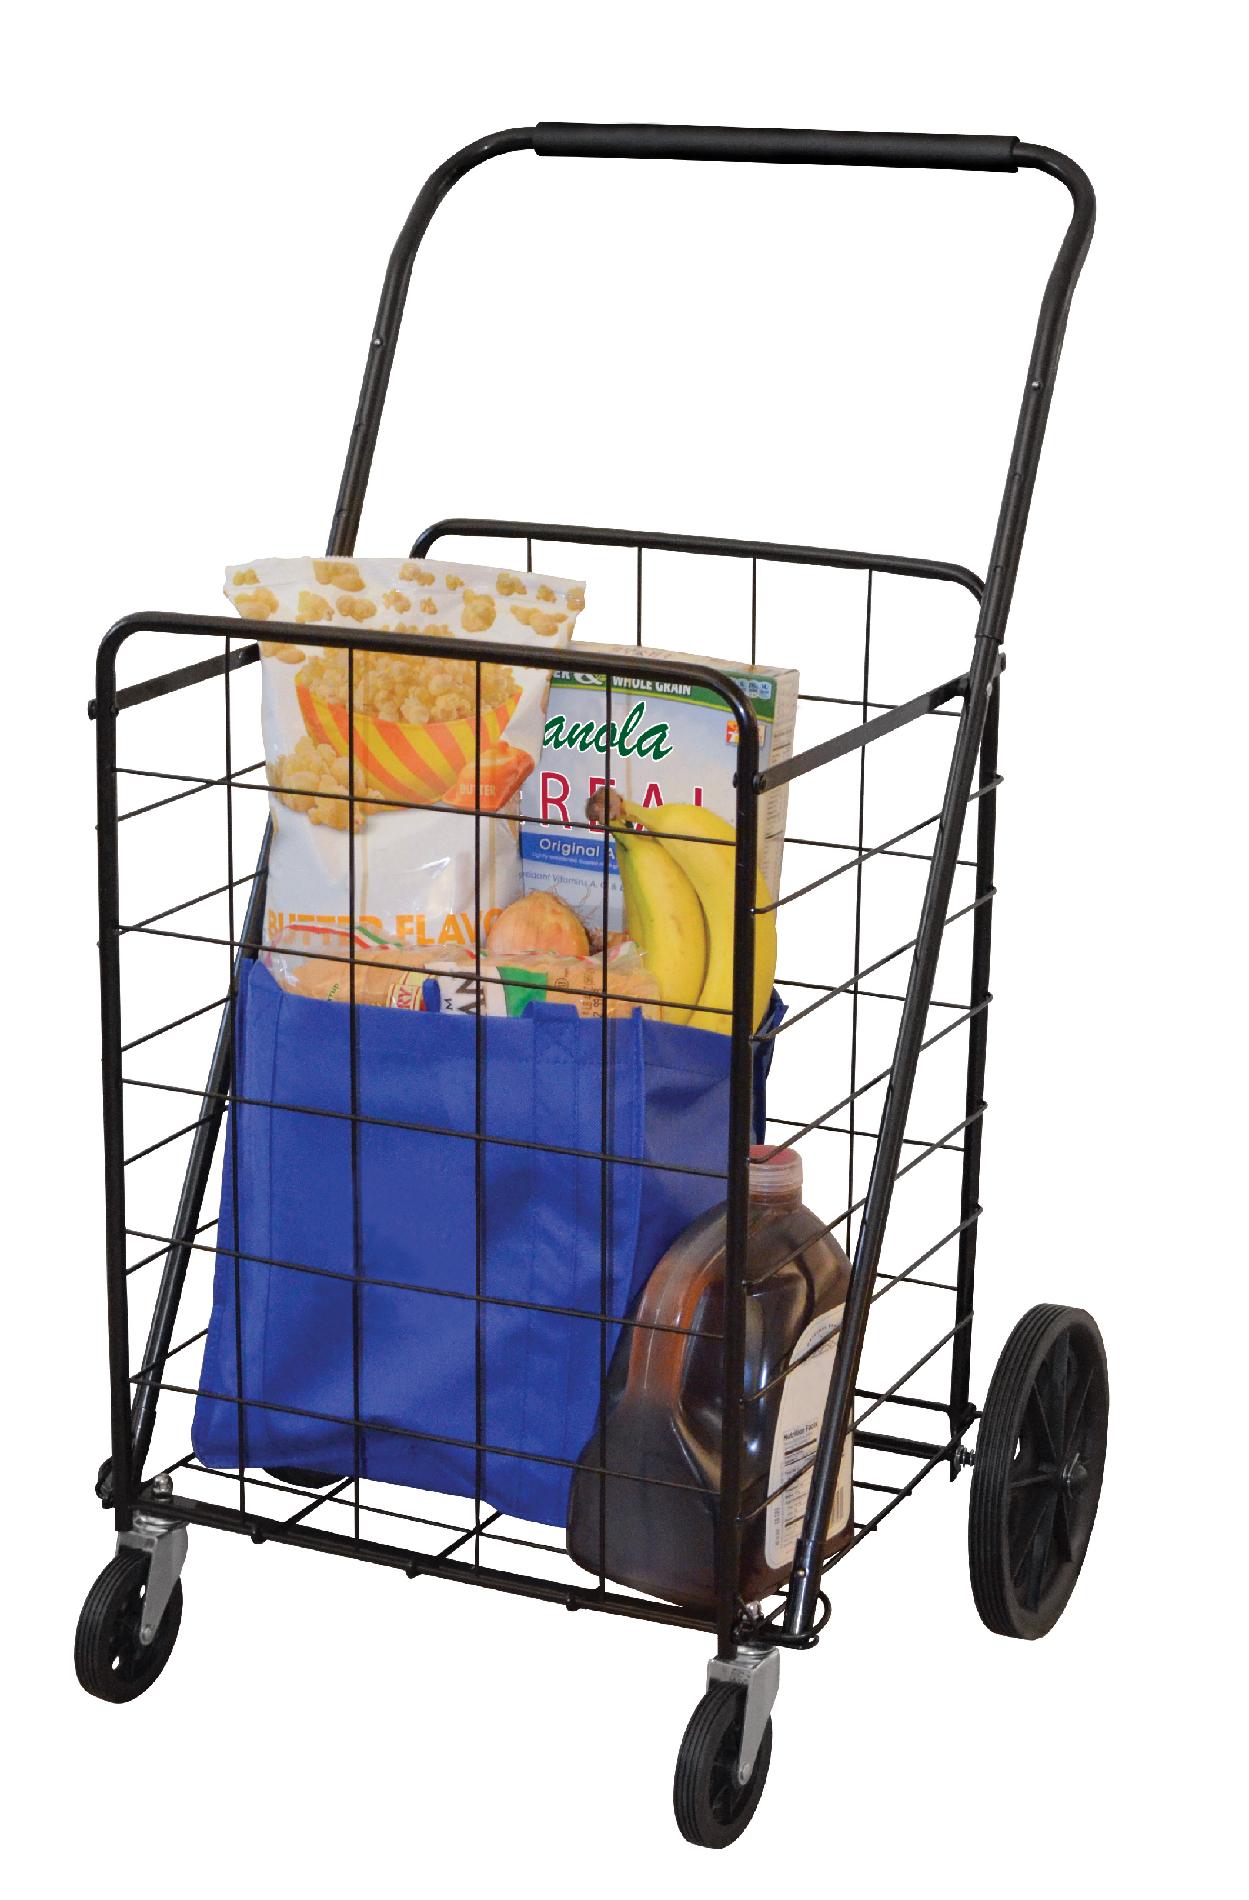 Helping Hand Pop /'n Shop Shopping Cart SD8 Lightweight Sturdy 50 LB Capacity